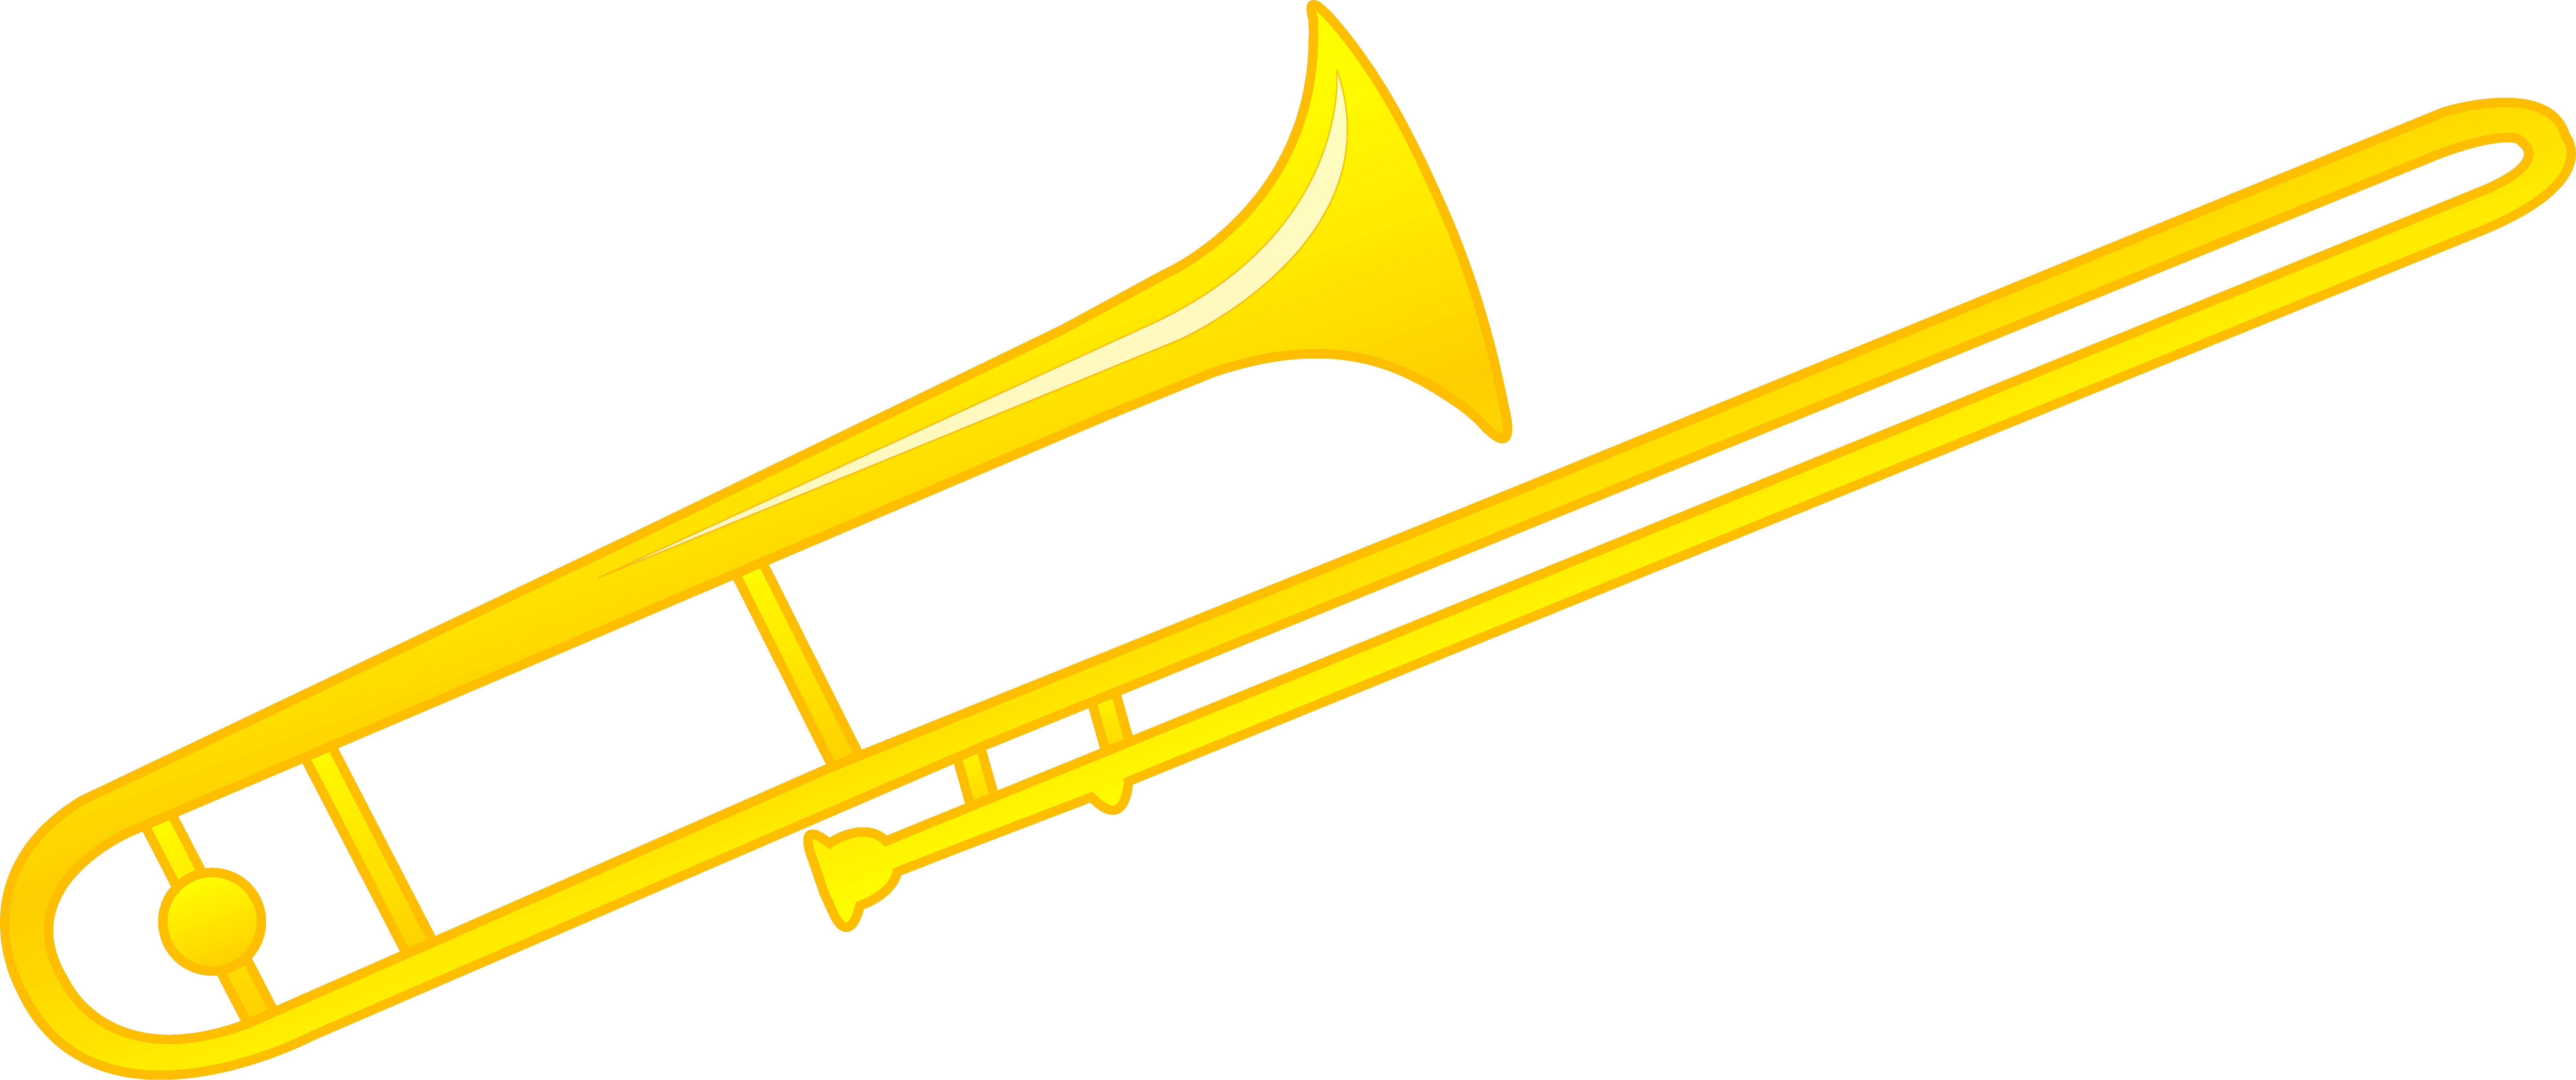 Trombone Musical Instrument - Free Clip Art